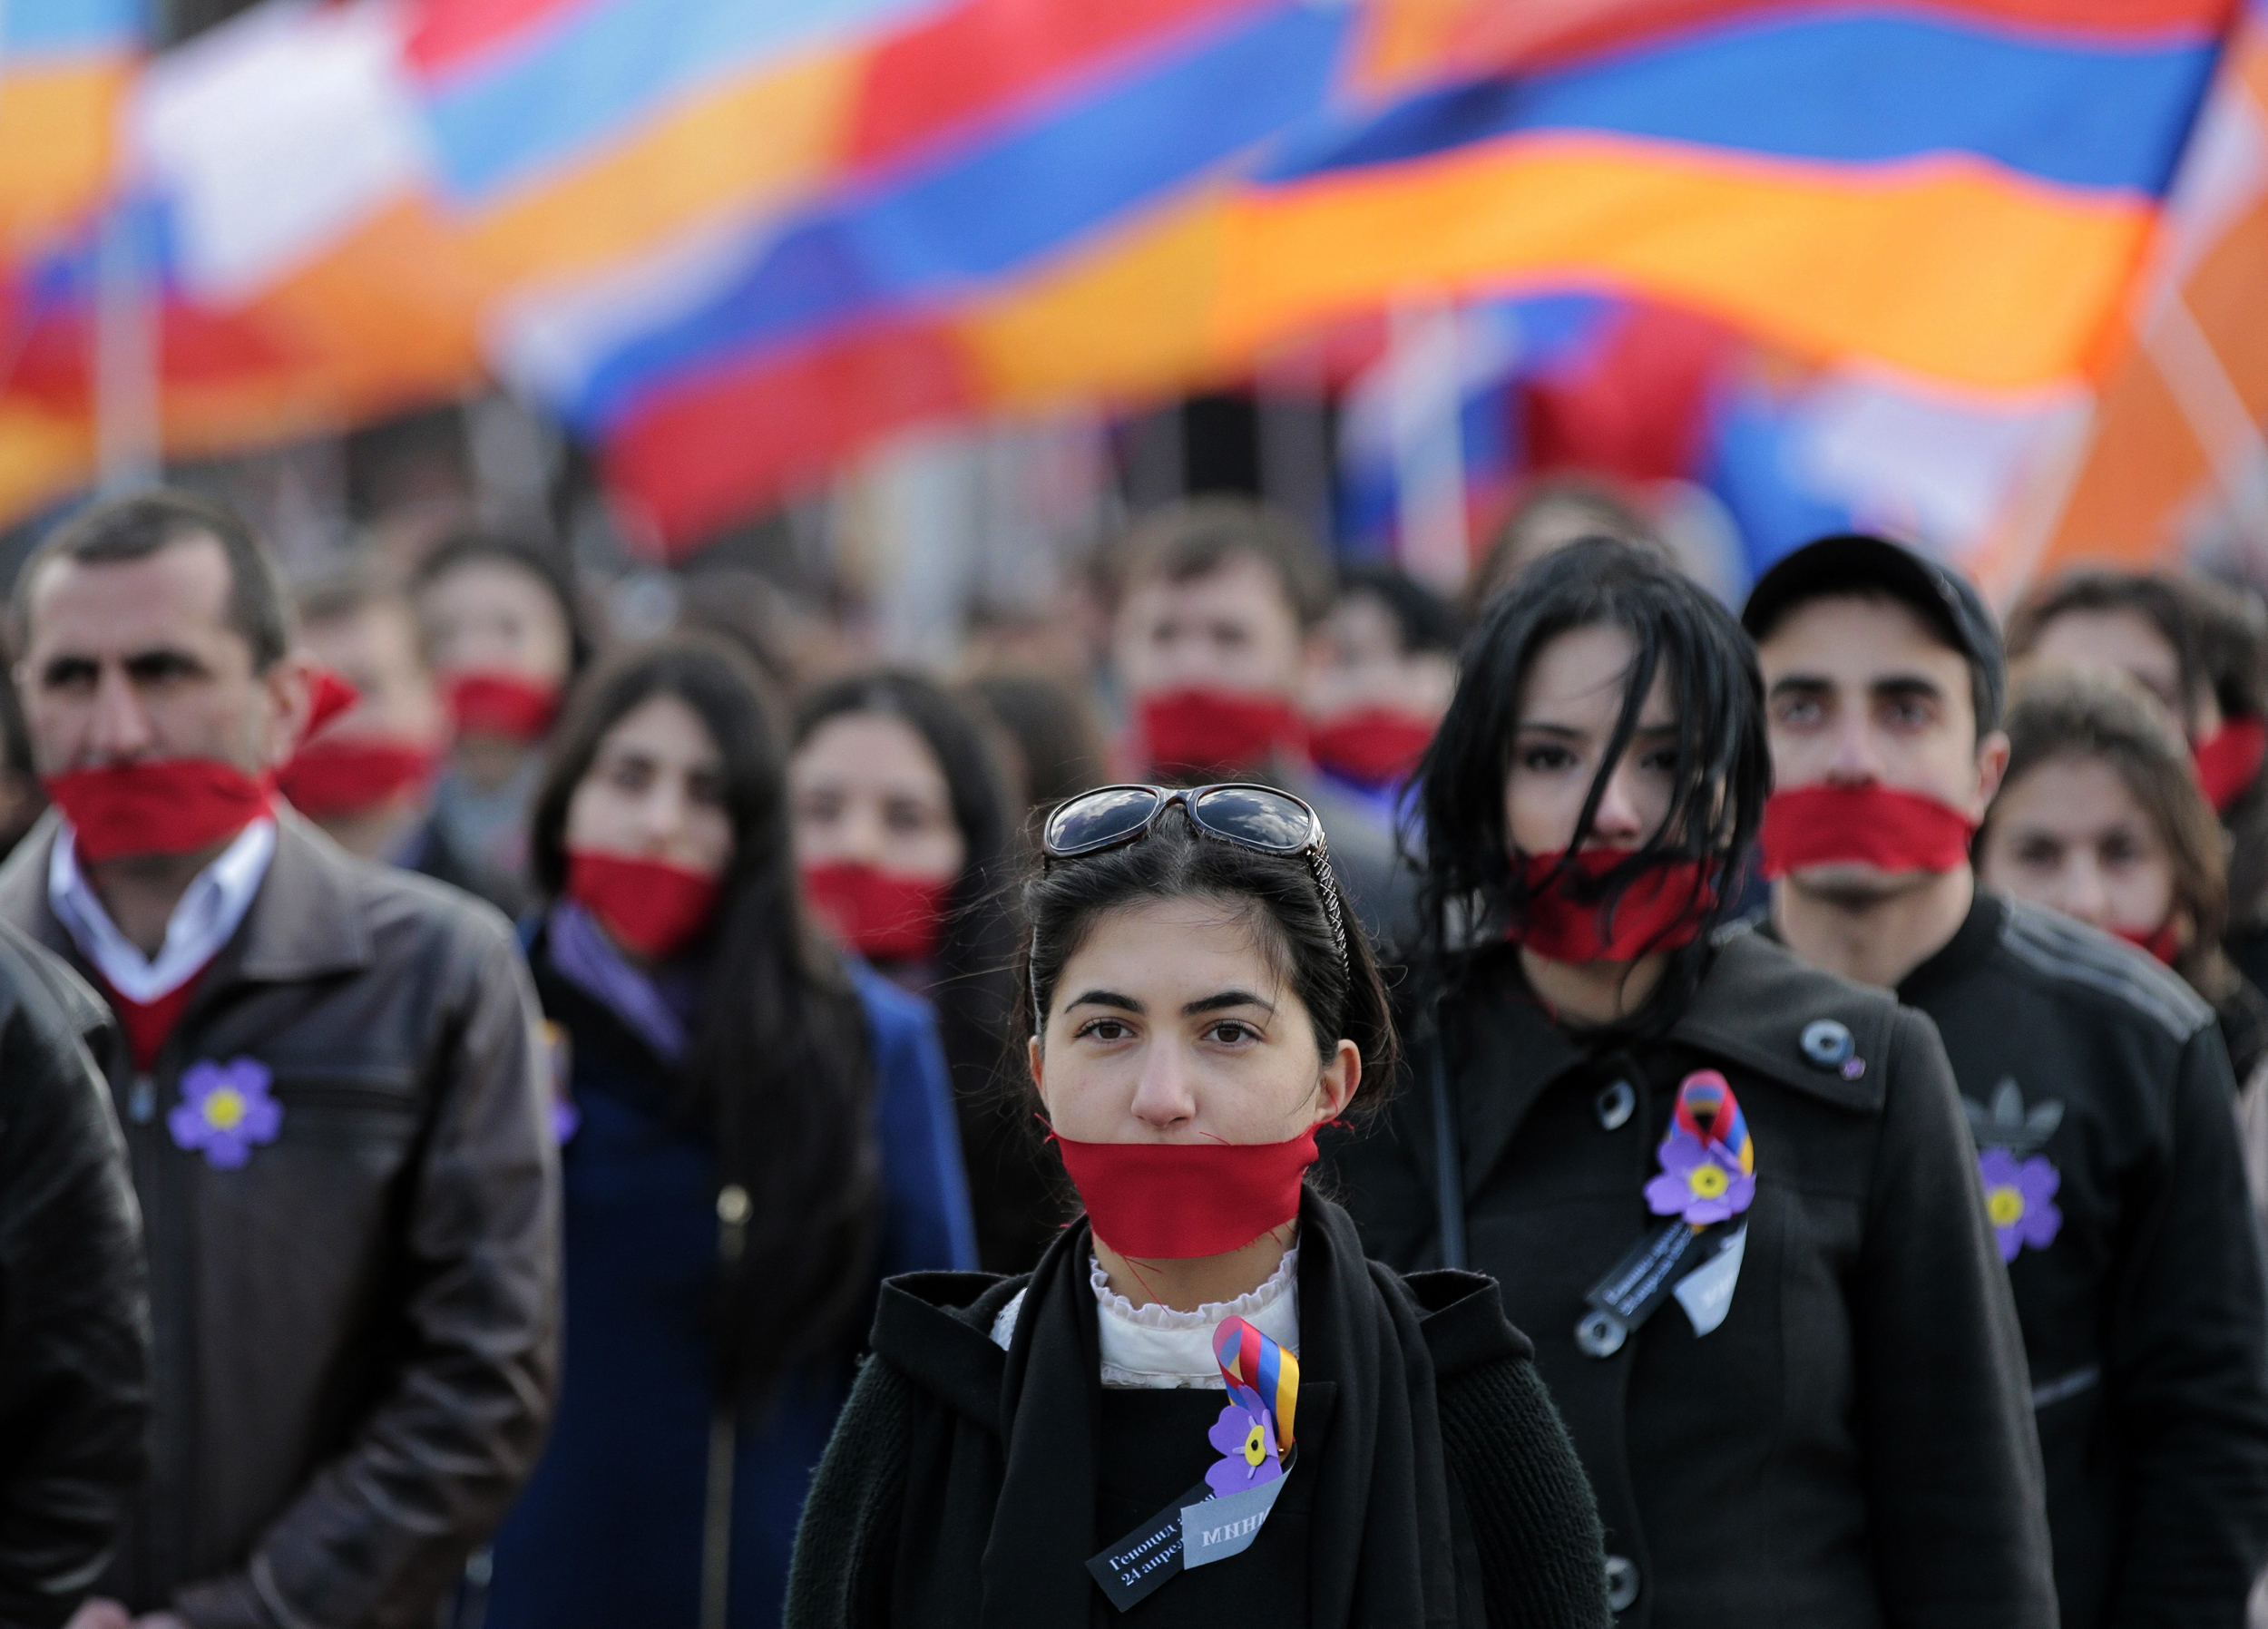 http://media3.s-nbcnews.com/i/MSNBC/Components/Slideshows/_production/ss-150424-armenian-genocide/ss-150424-arminian-genocide-03.jpg